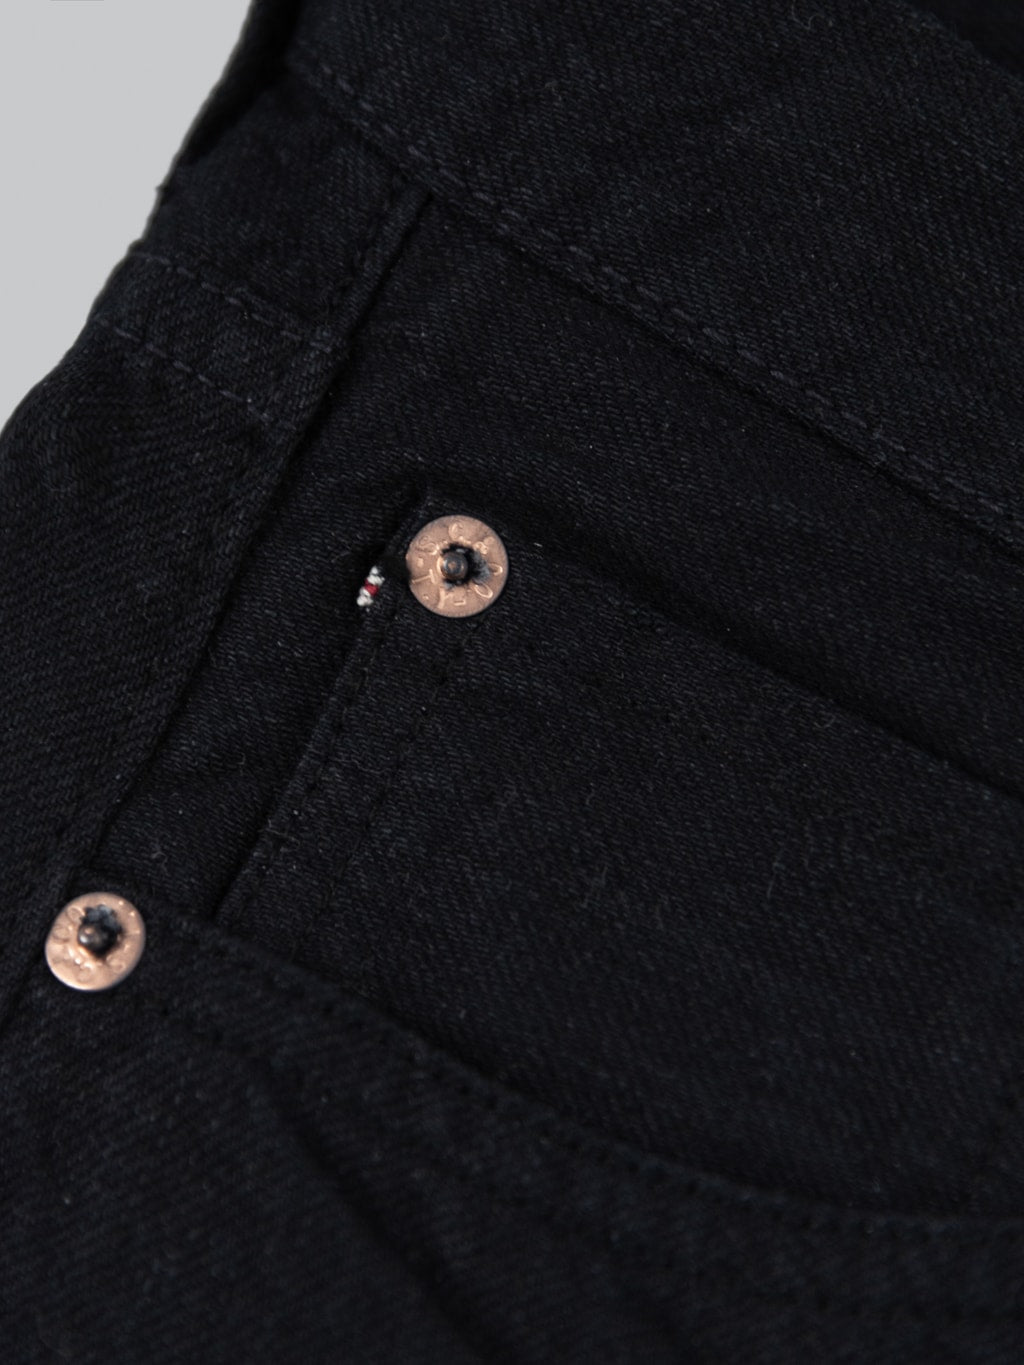 Sugar Cane Type III 13oz Black Denim Slim Jeans details